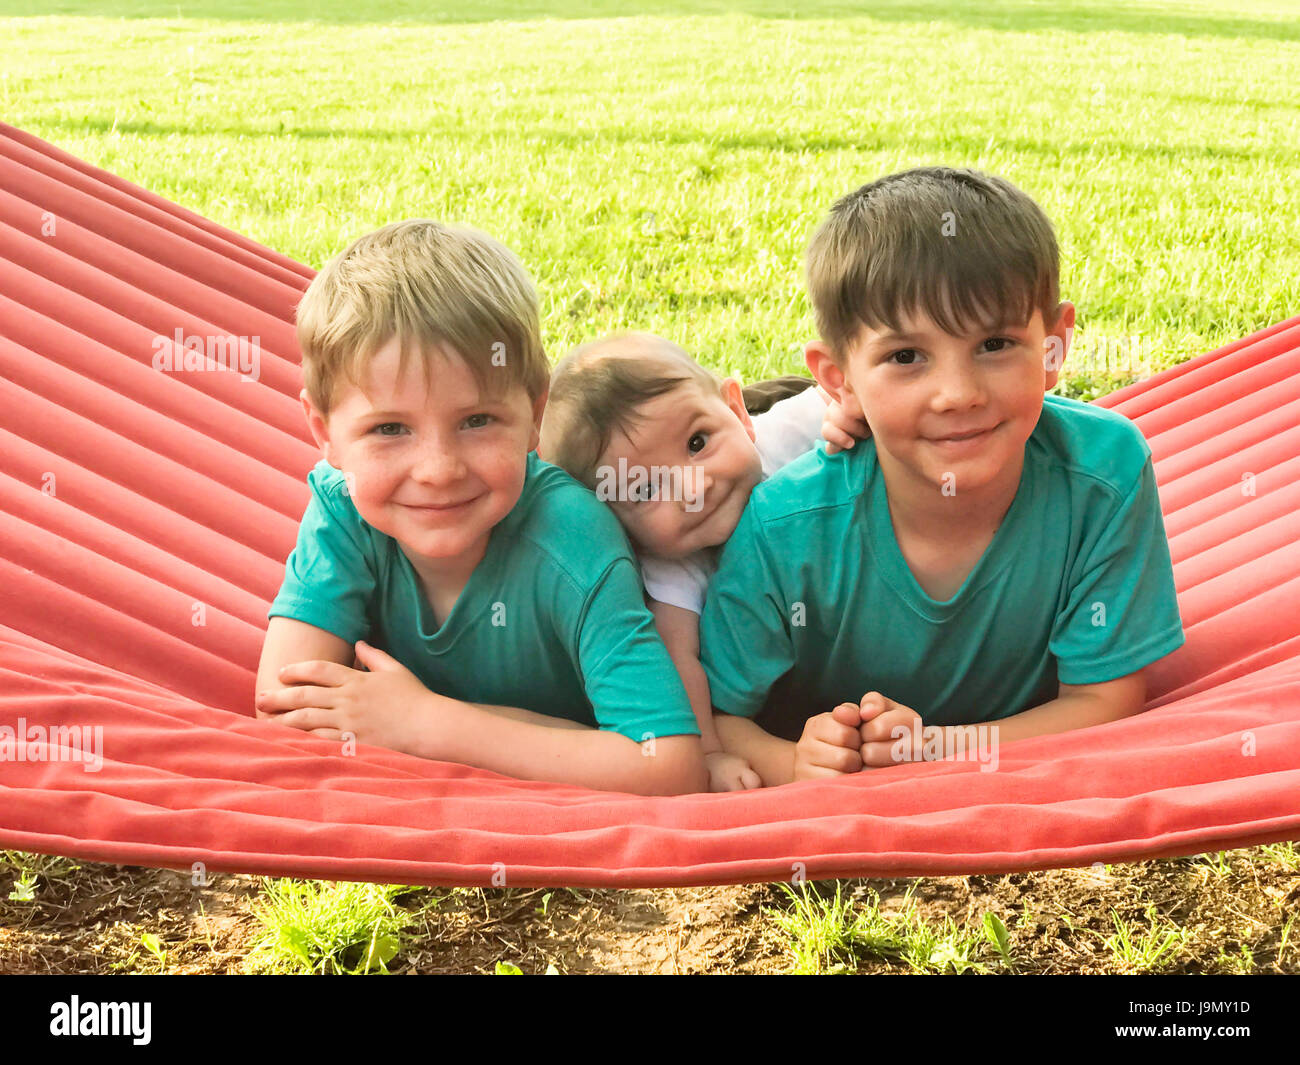 Three boys on red hammock Stock Photo